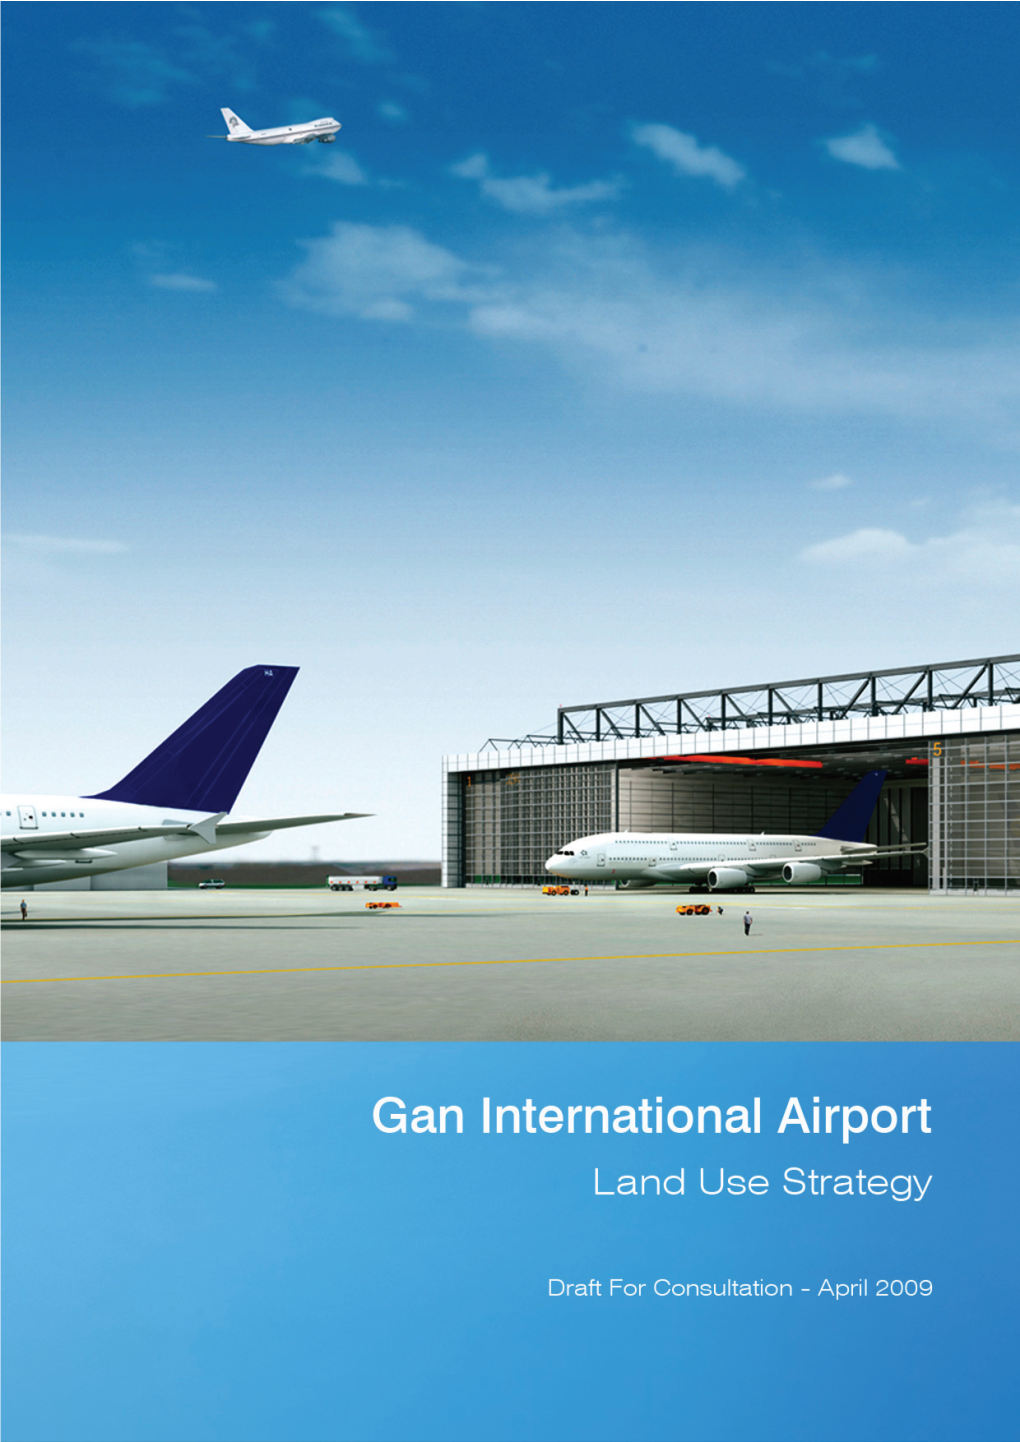 Gan International Airport Details